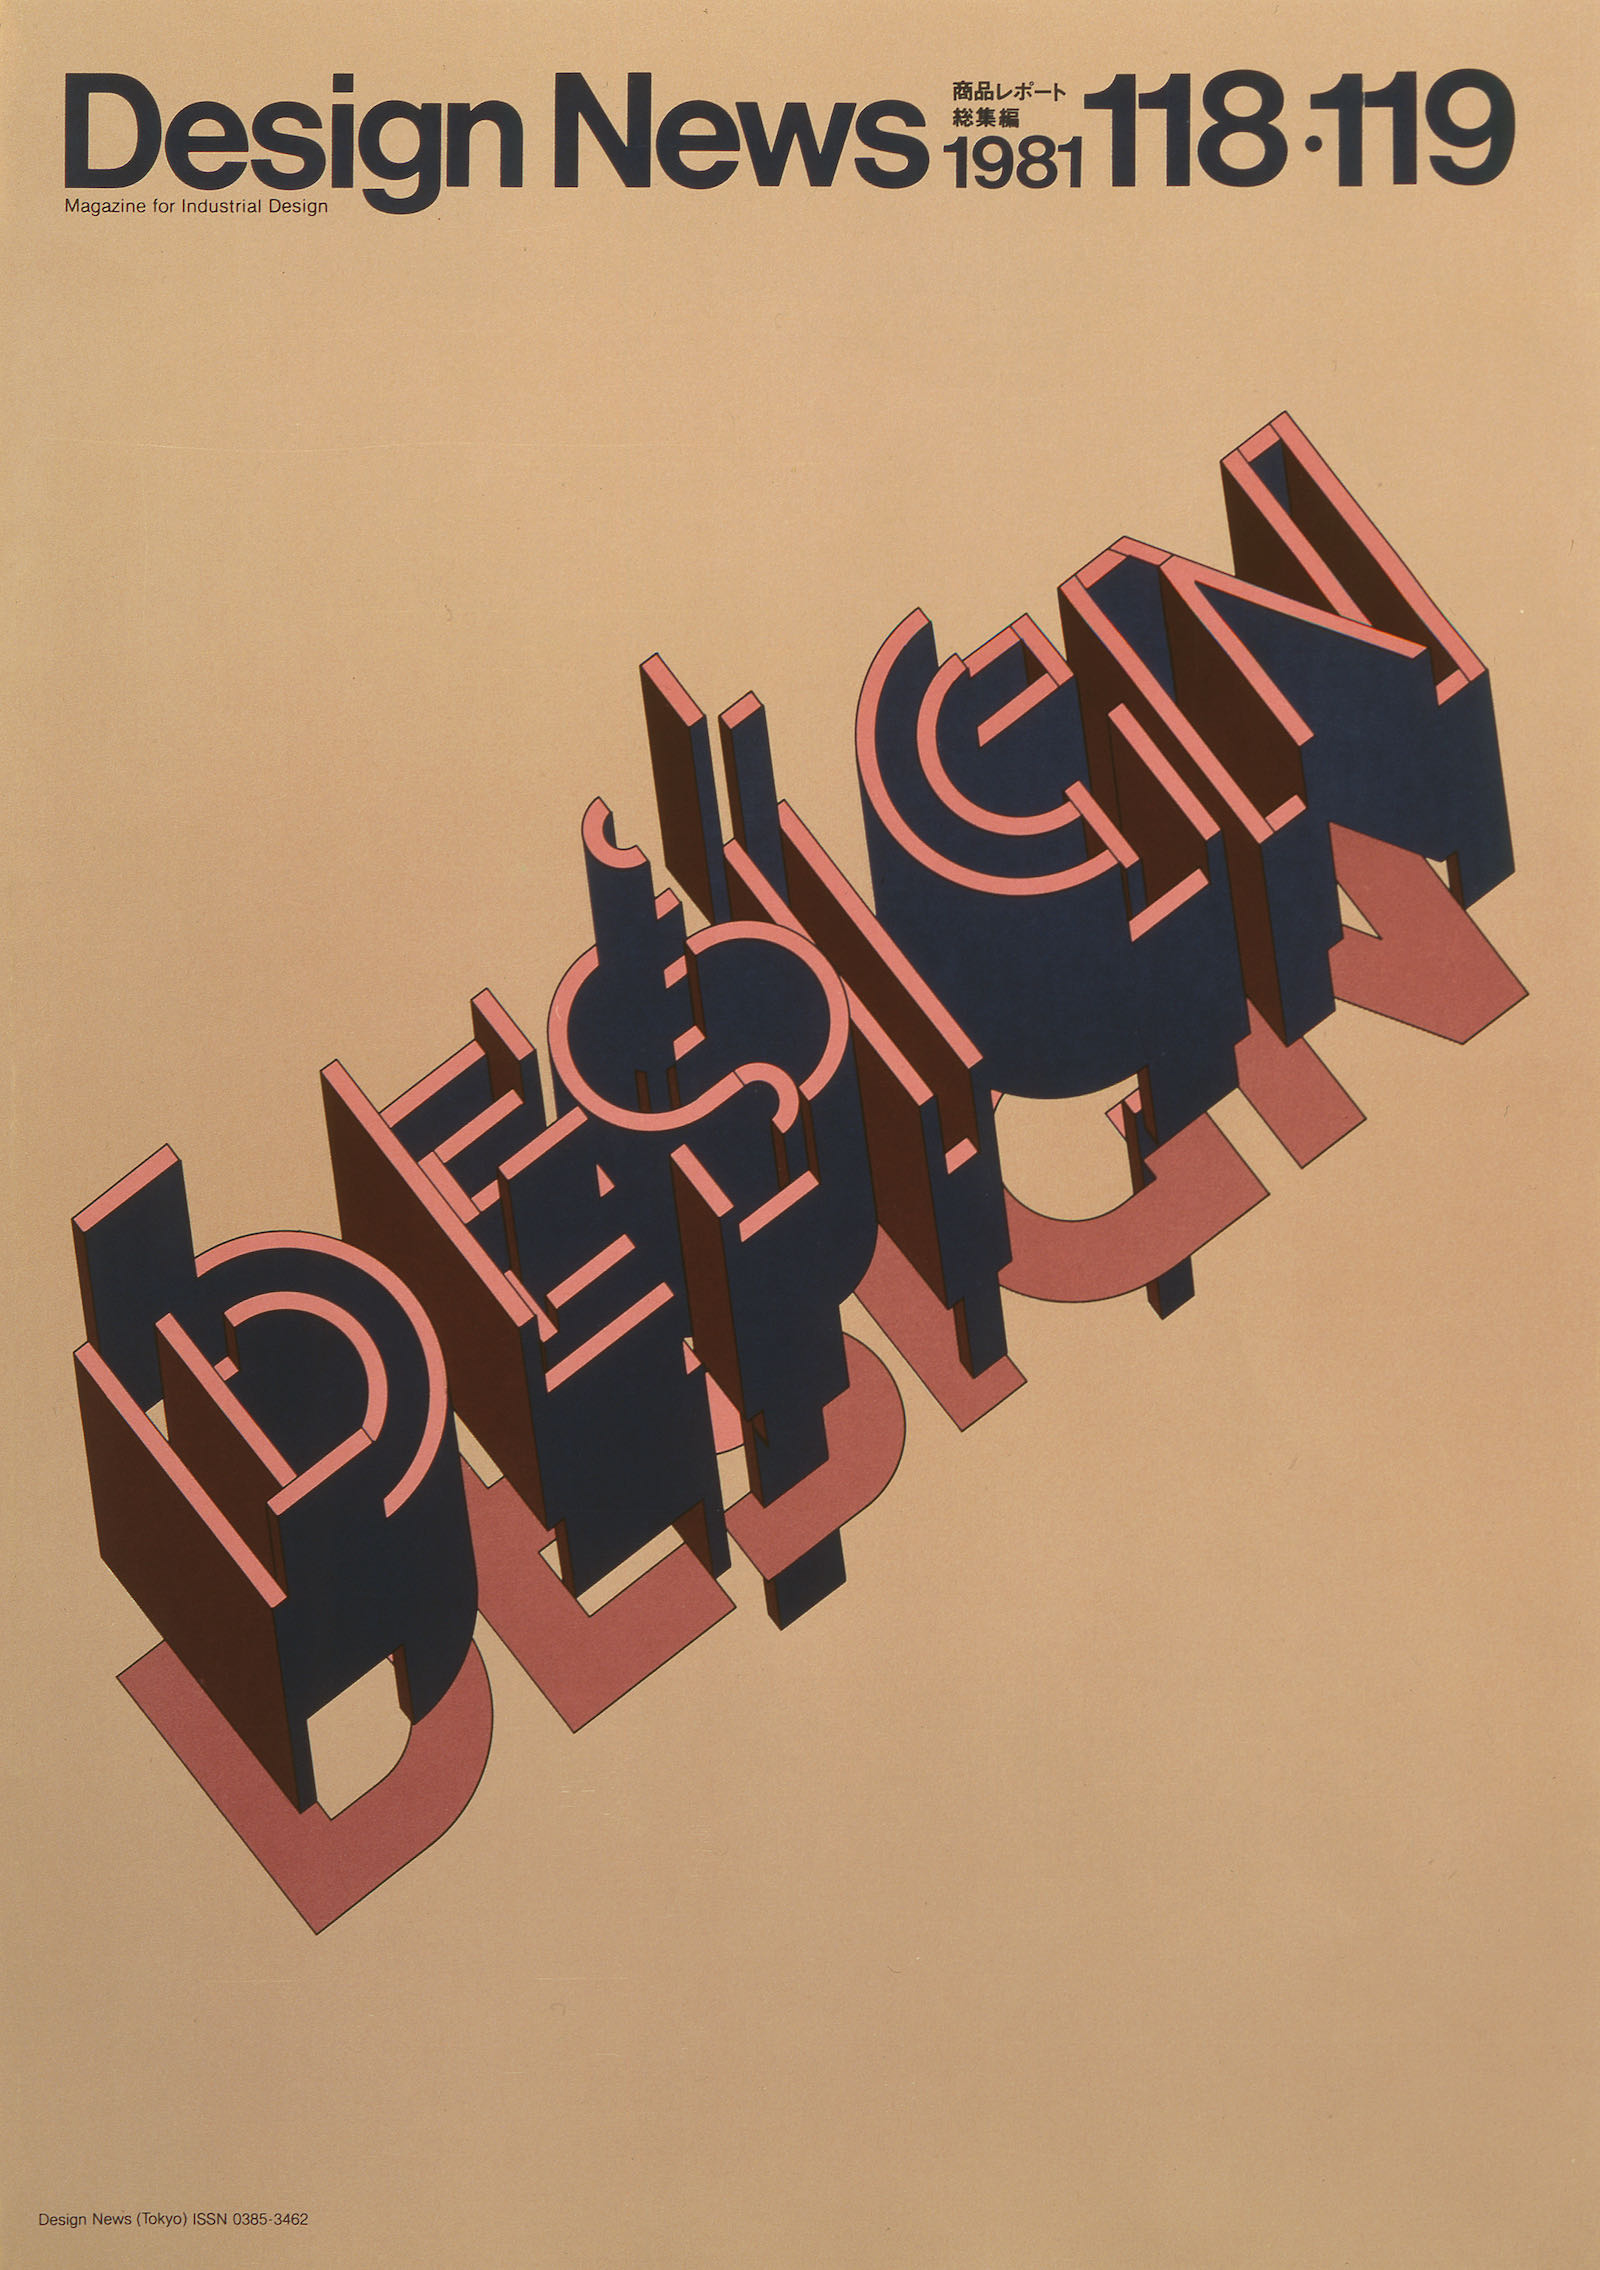 Design News Cover | Takenobu Igarashi